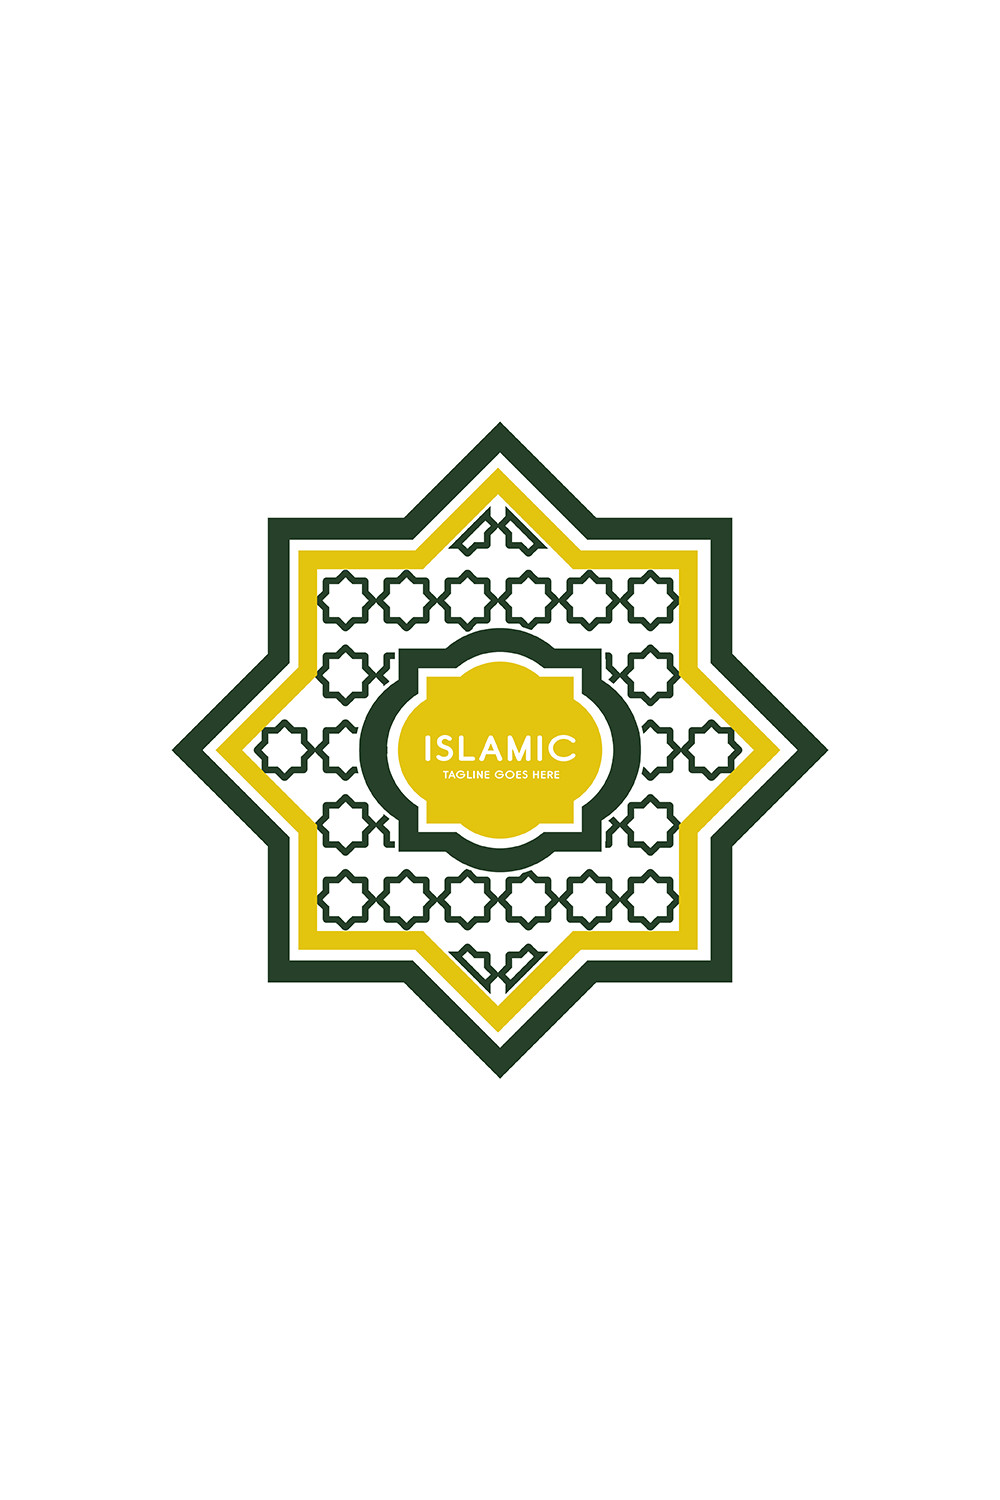 Islamic Logo Design Pinterest image.